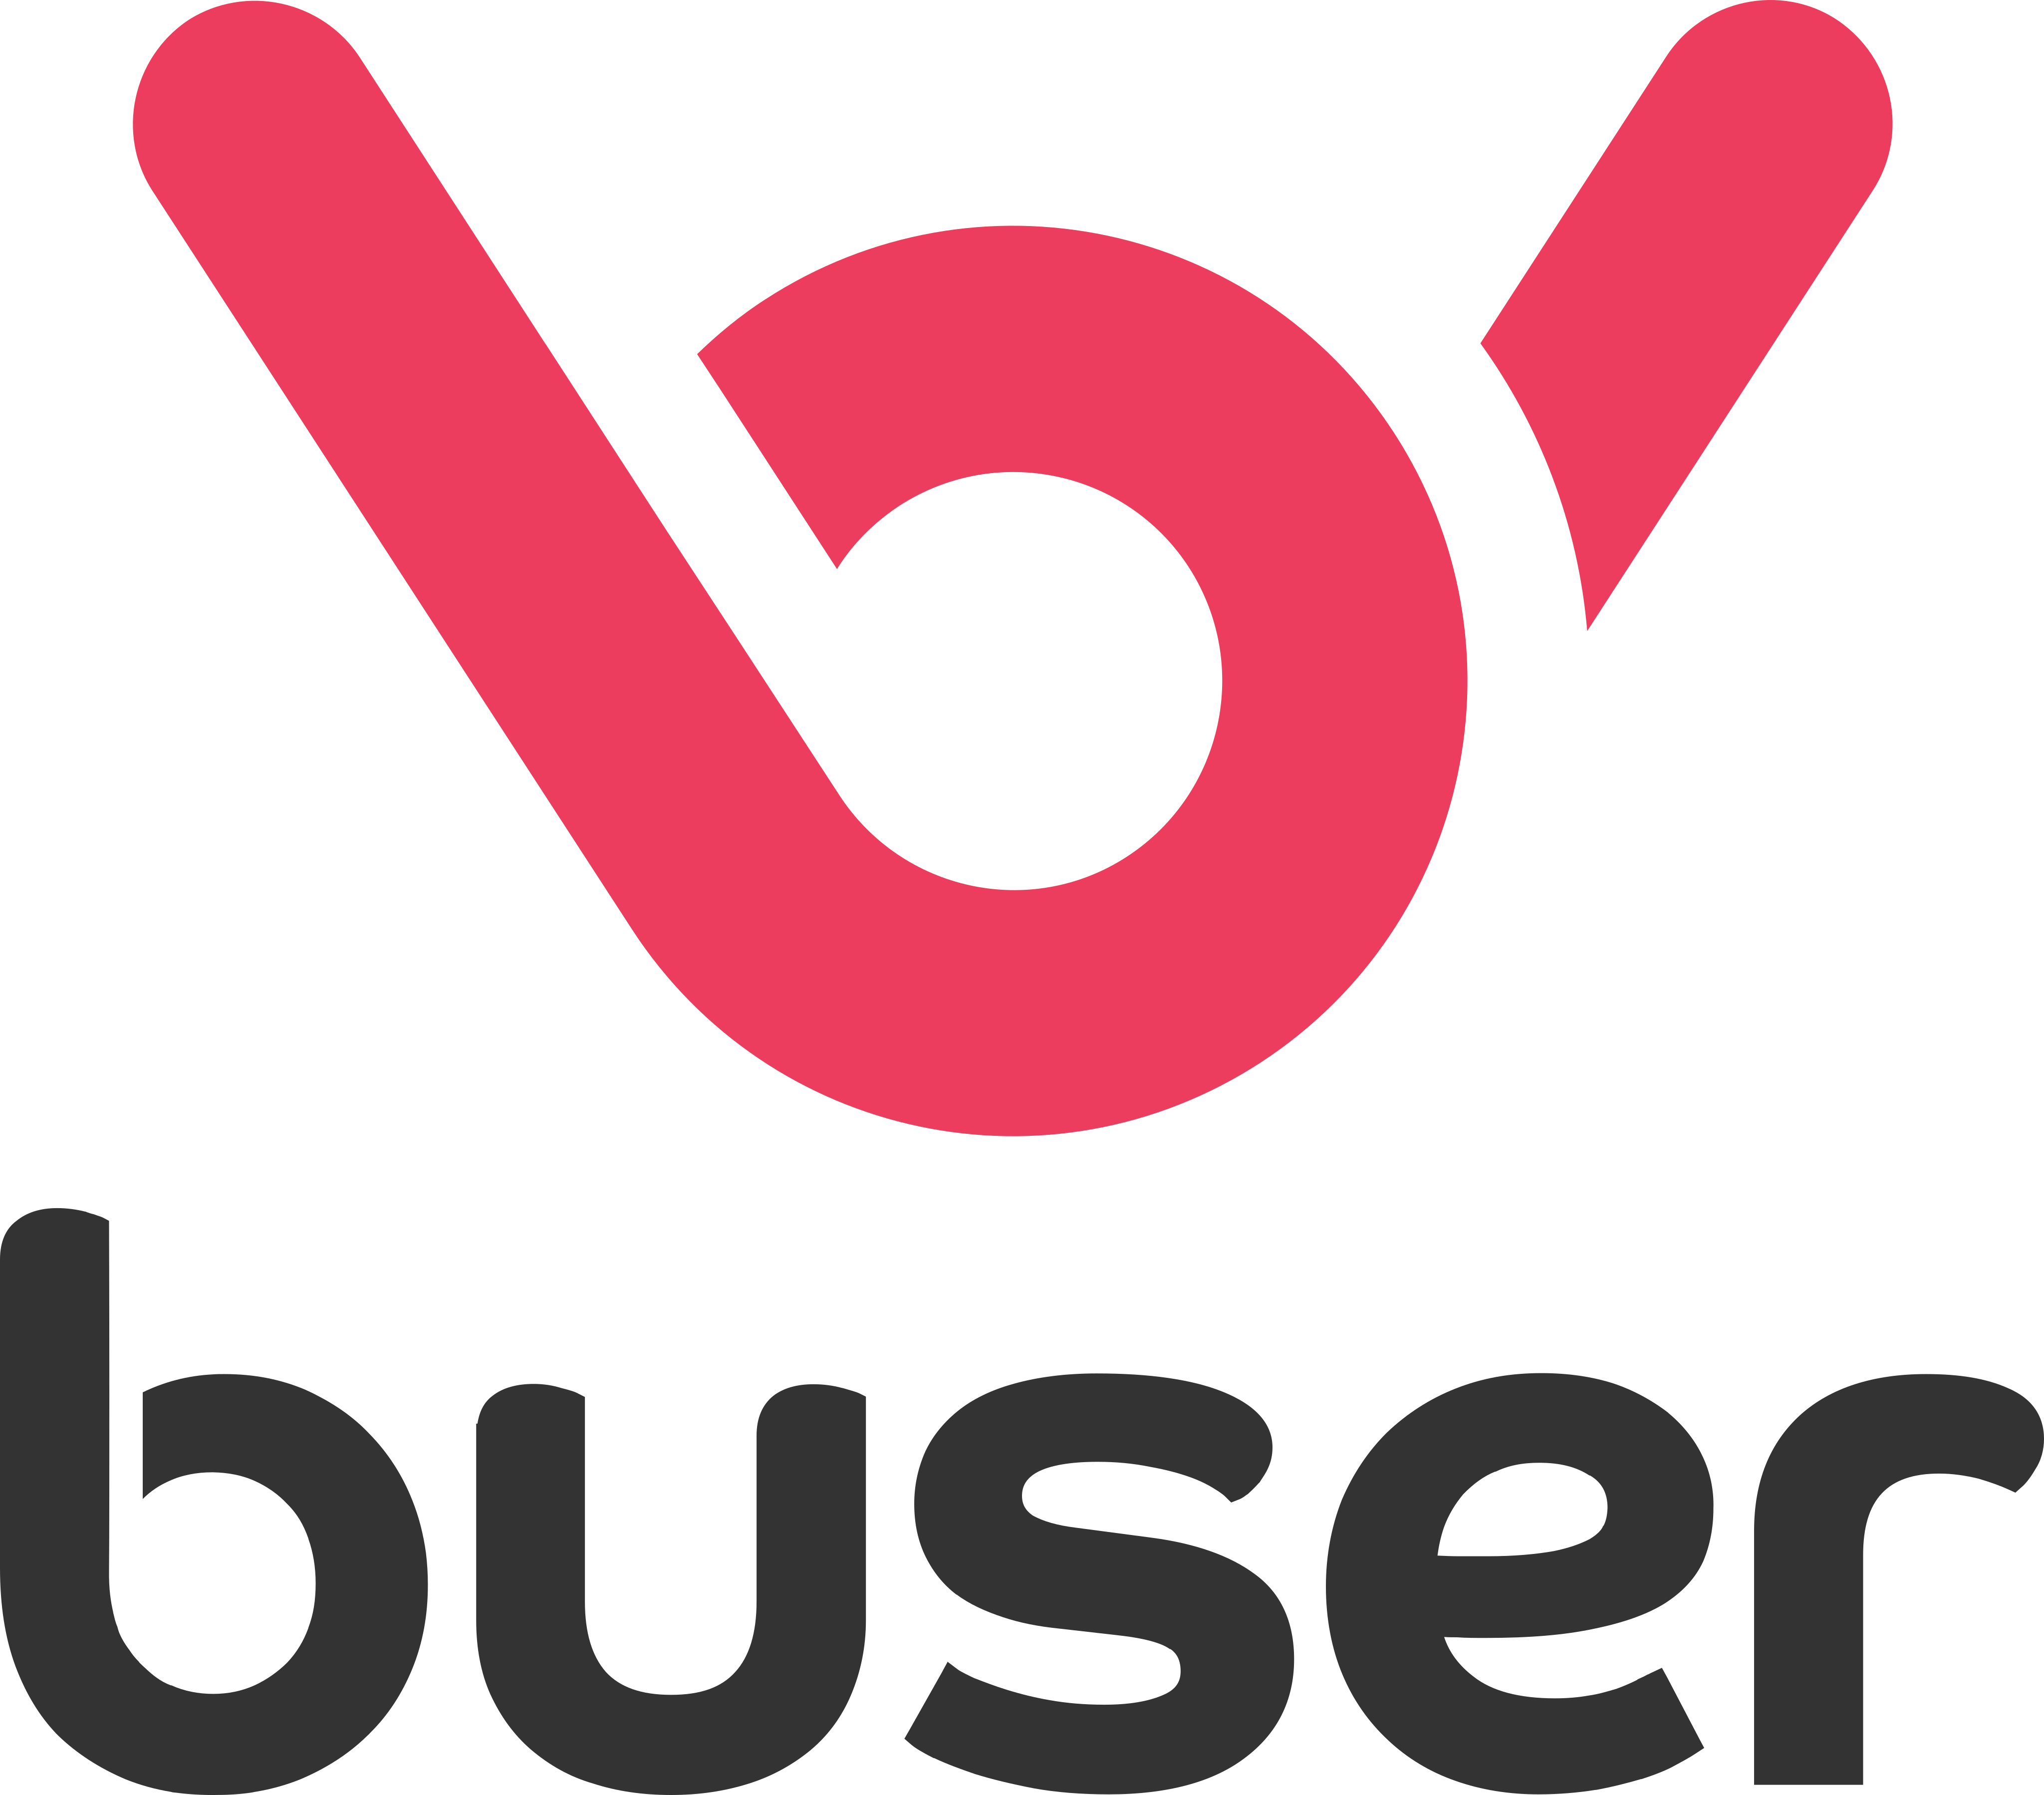 Buser Logo - PNG e Vetor - Download de Logo